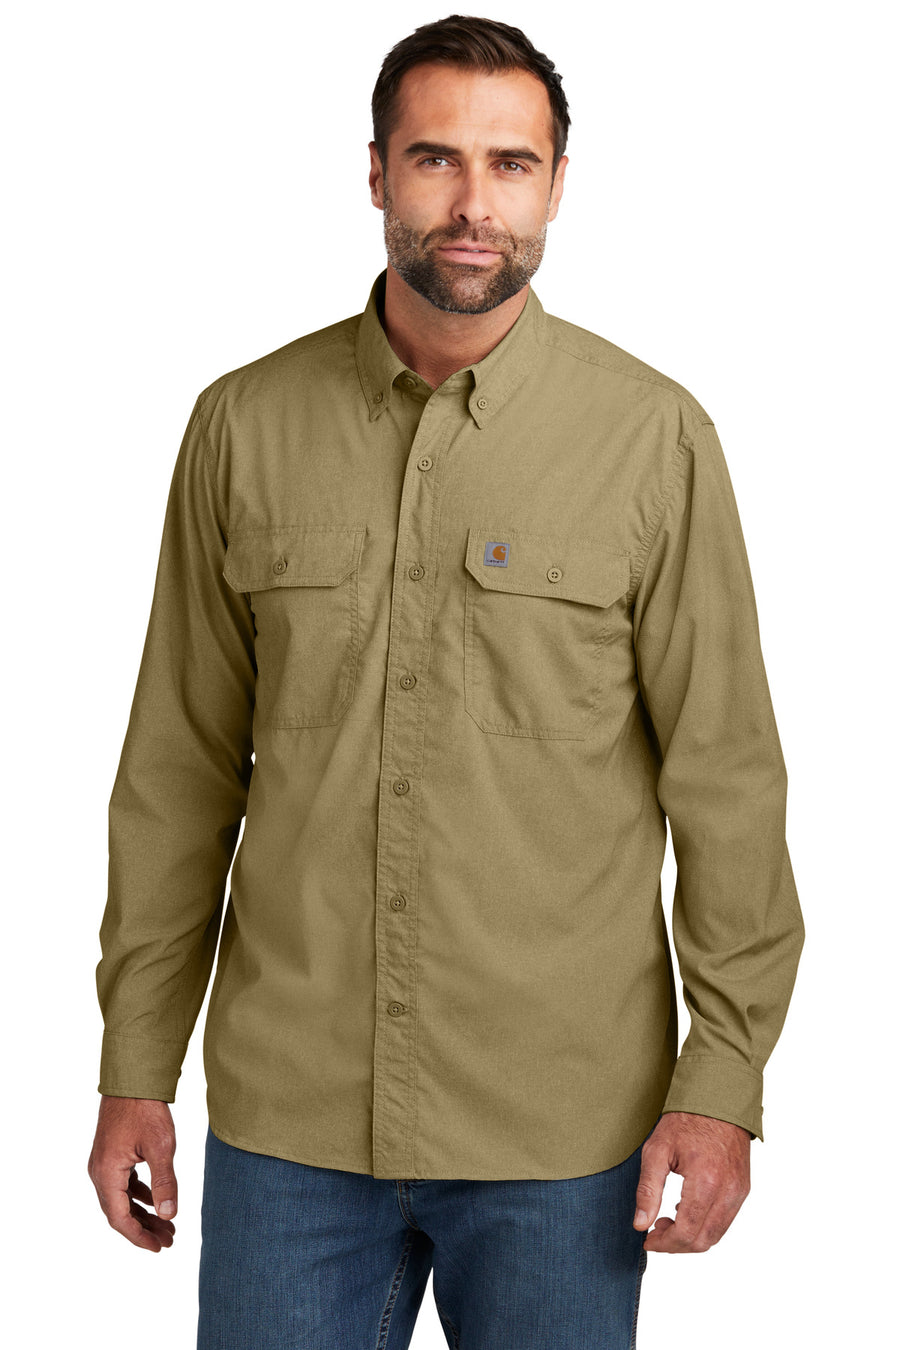 Carhartt Force Solid Long Sleeve Shirt